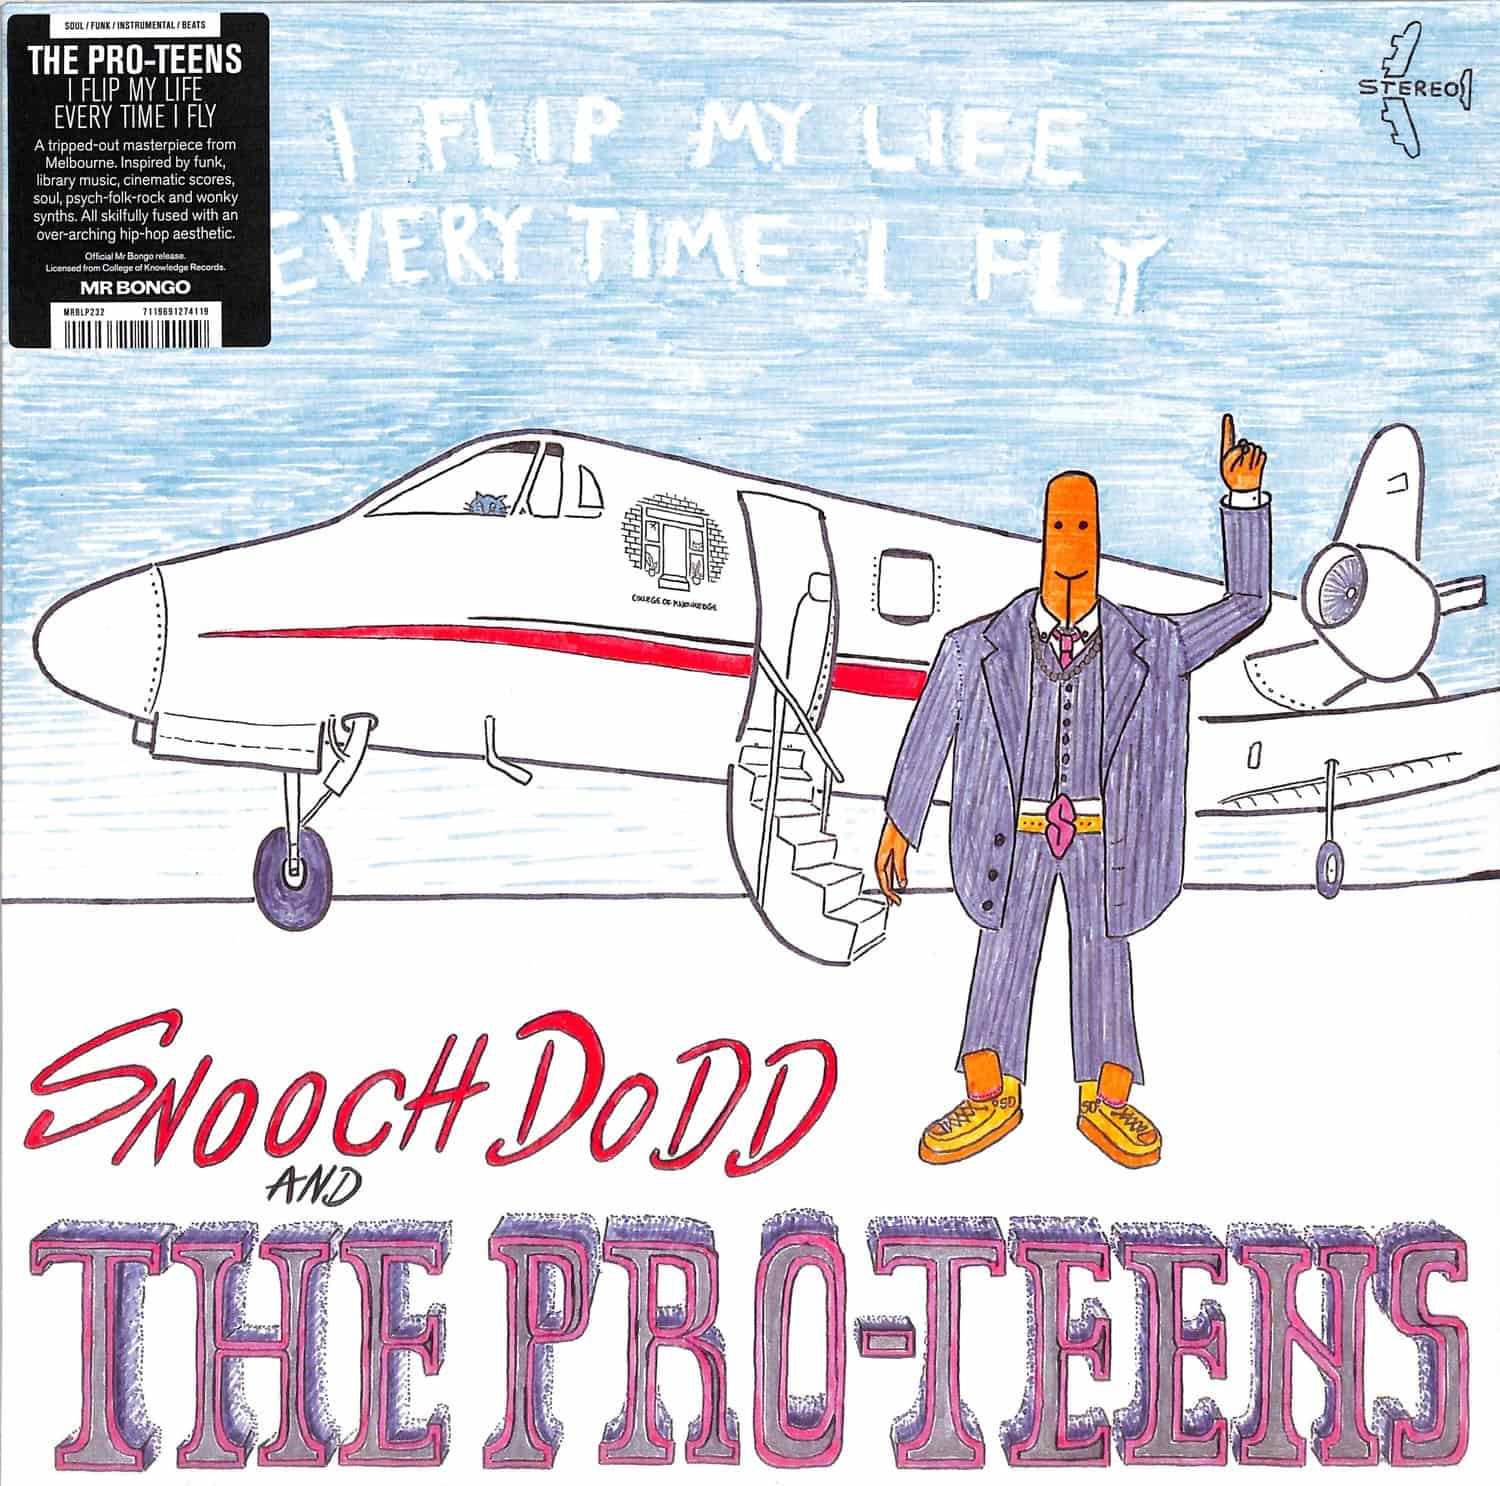 Snooch Dodd & The Pro-Teens - I FLIP MY LIFE EVERY TIME I FLY 